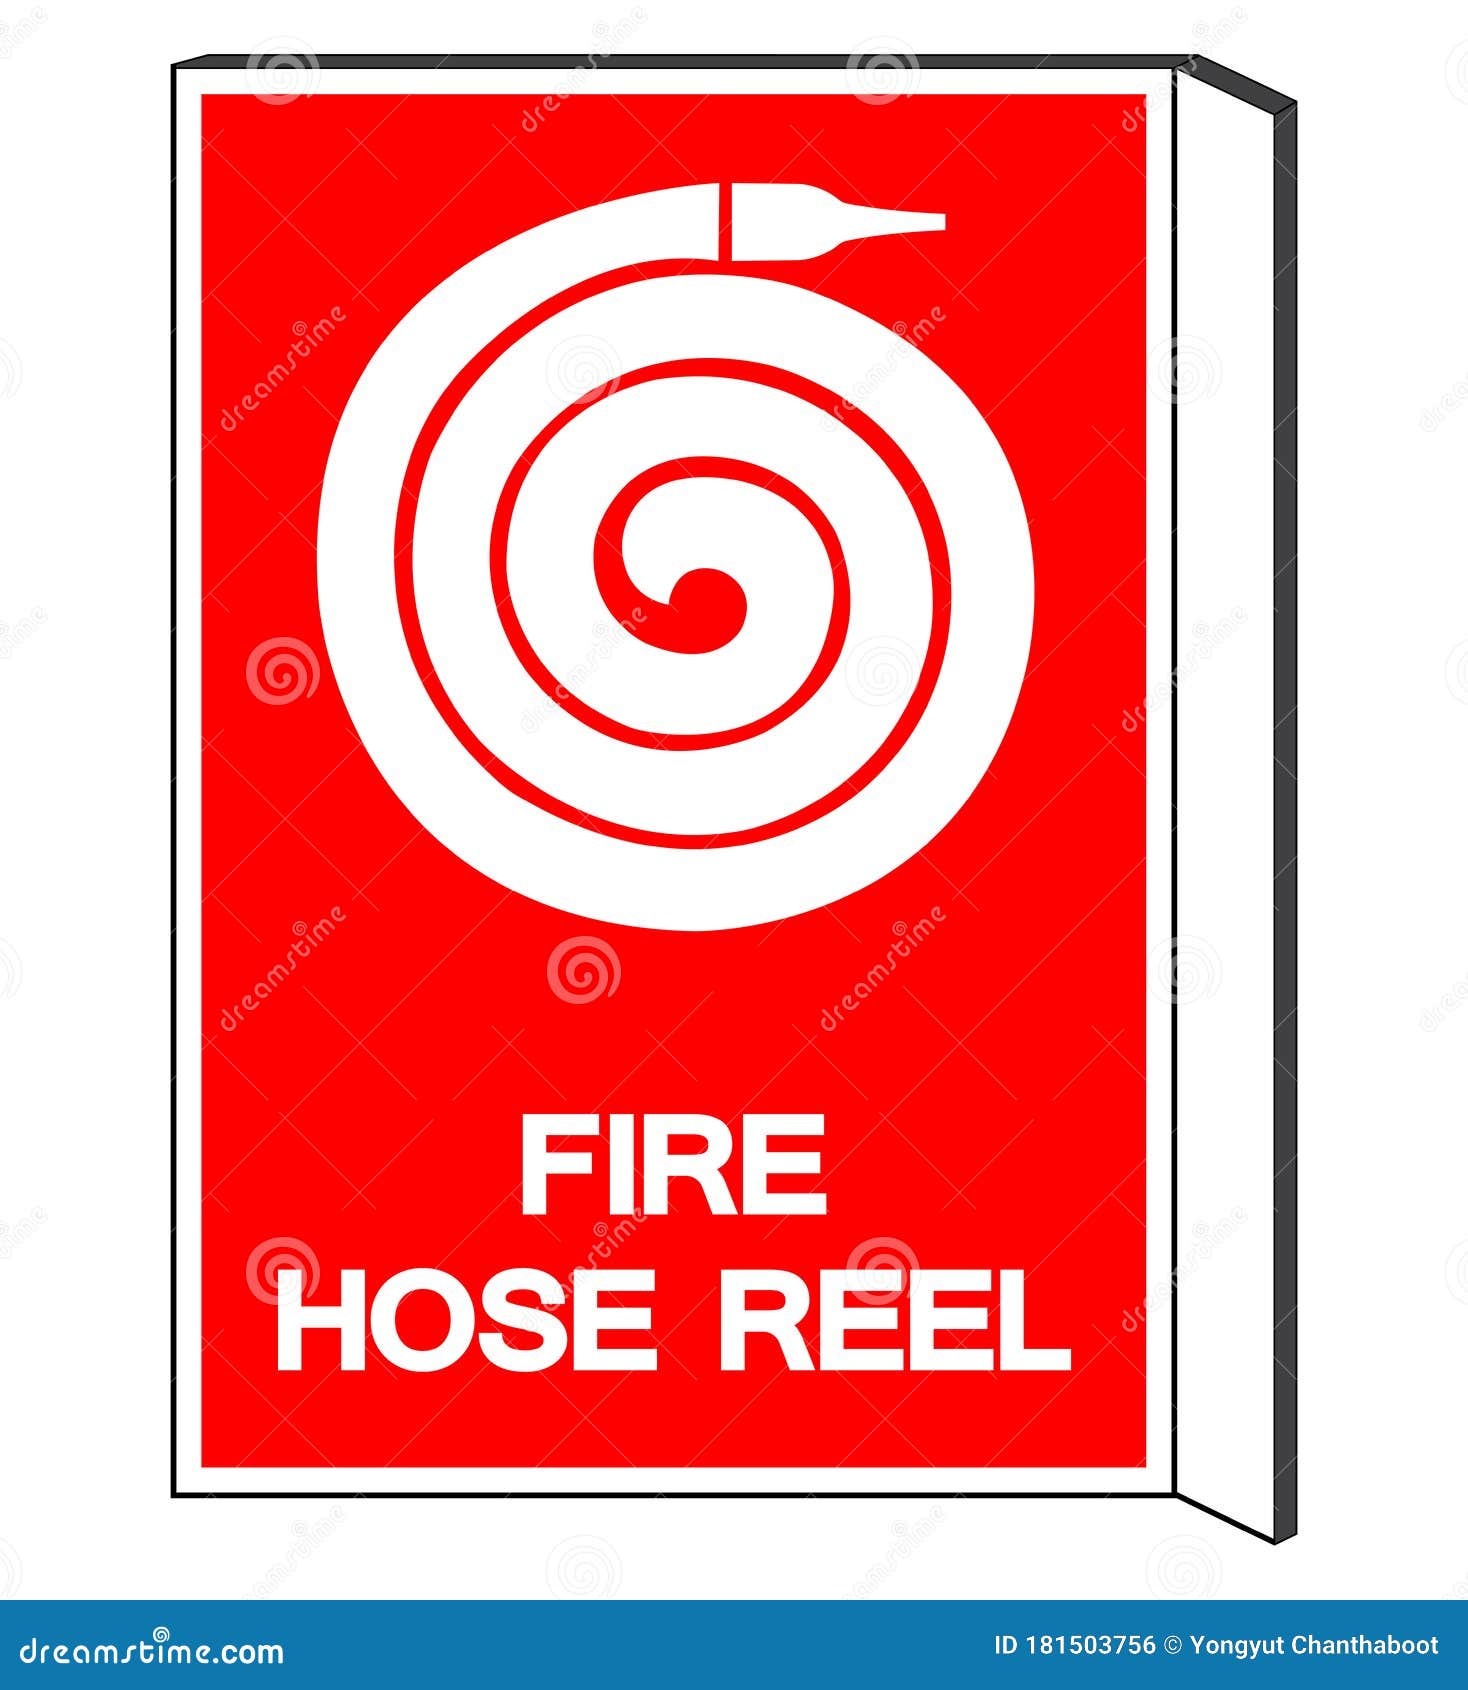 Fire Hose Reel Symbol Sign, Vector Illustration, Isolate on White